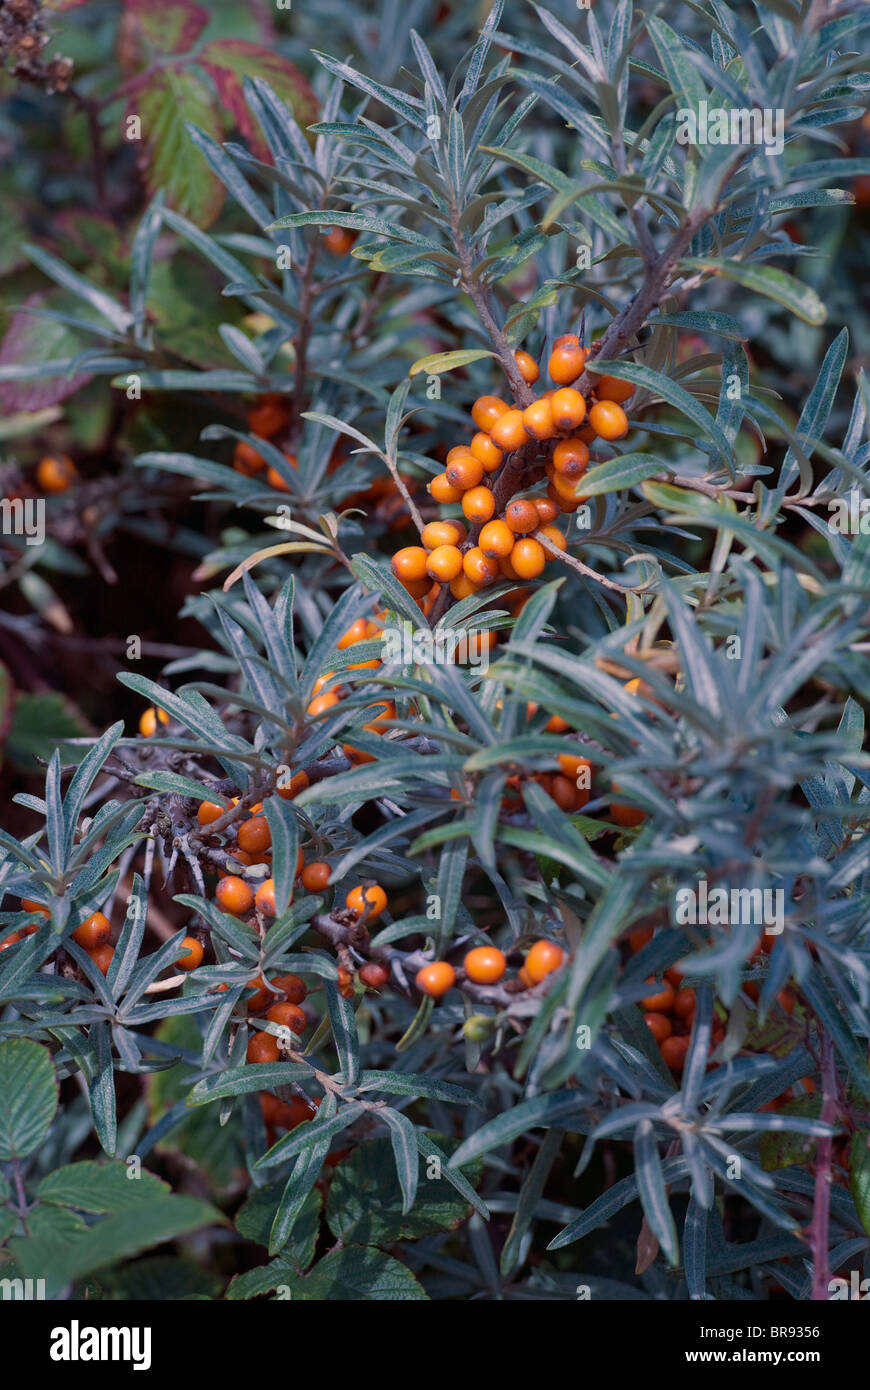 Pyracantha berries Stock Photo